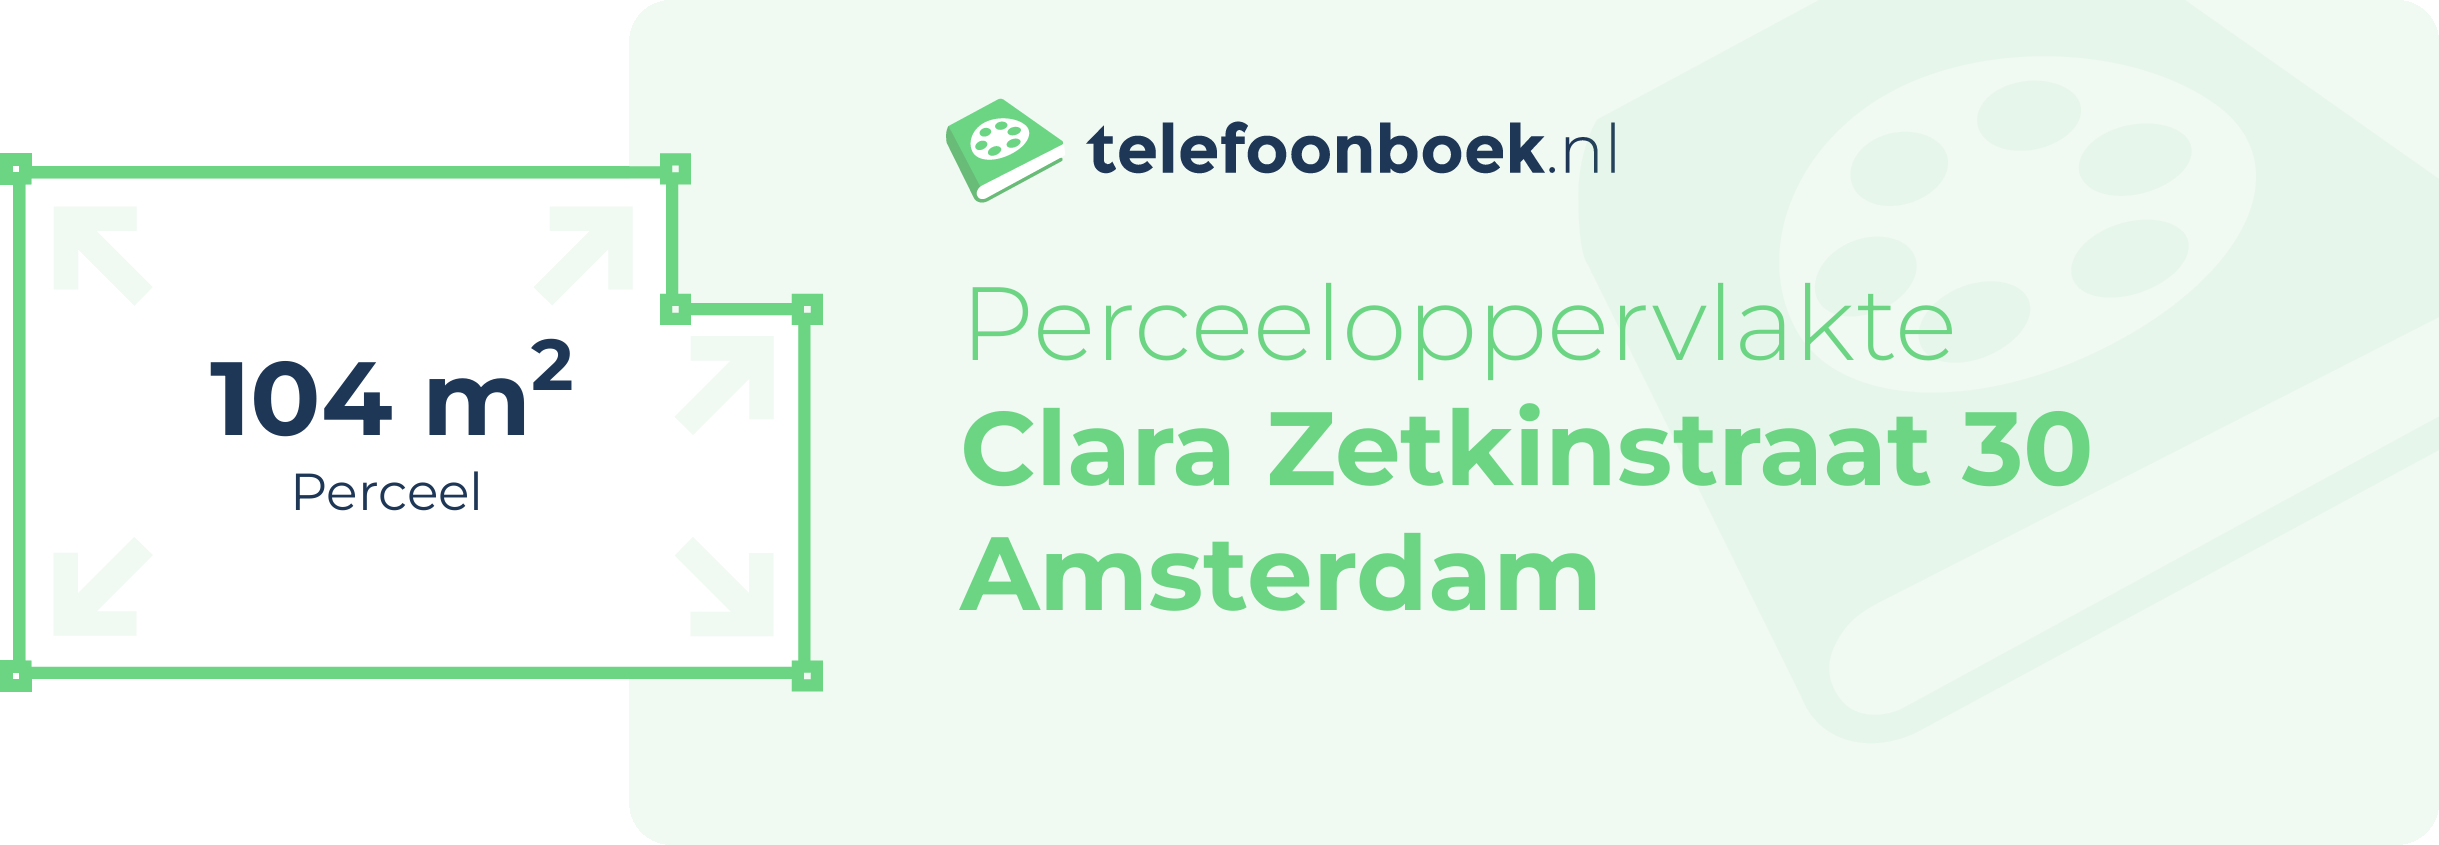 Perceeloppervlakte Clara Zetkinstraat 30 Amsterdam